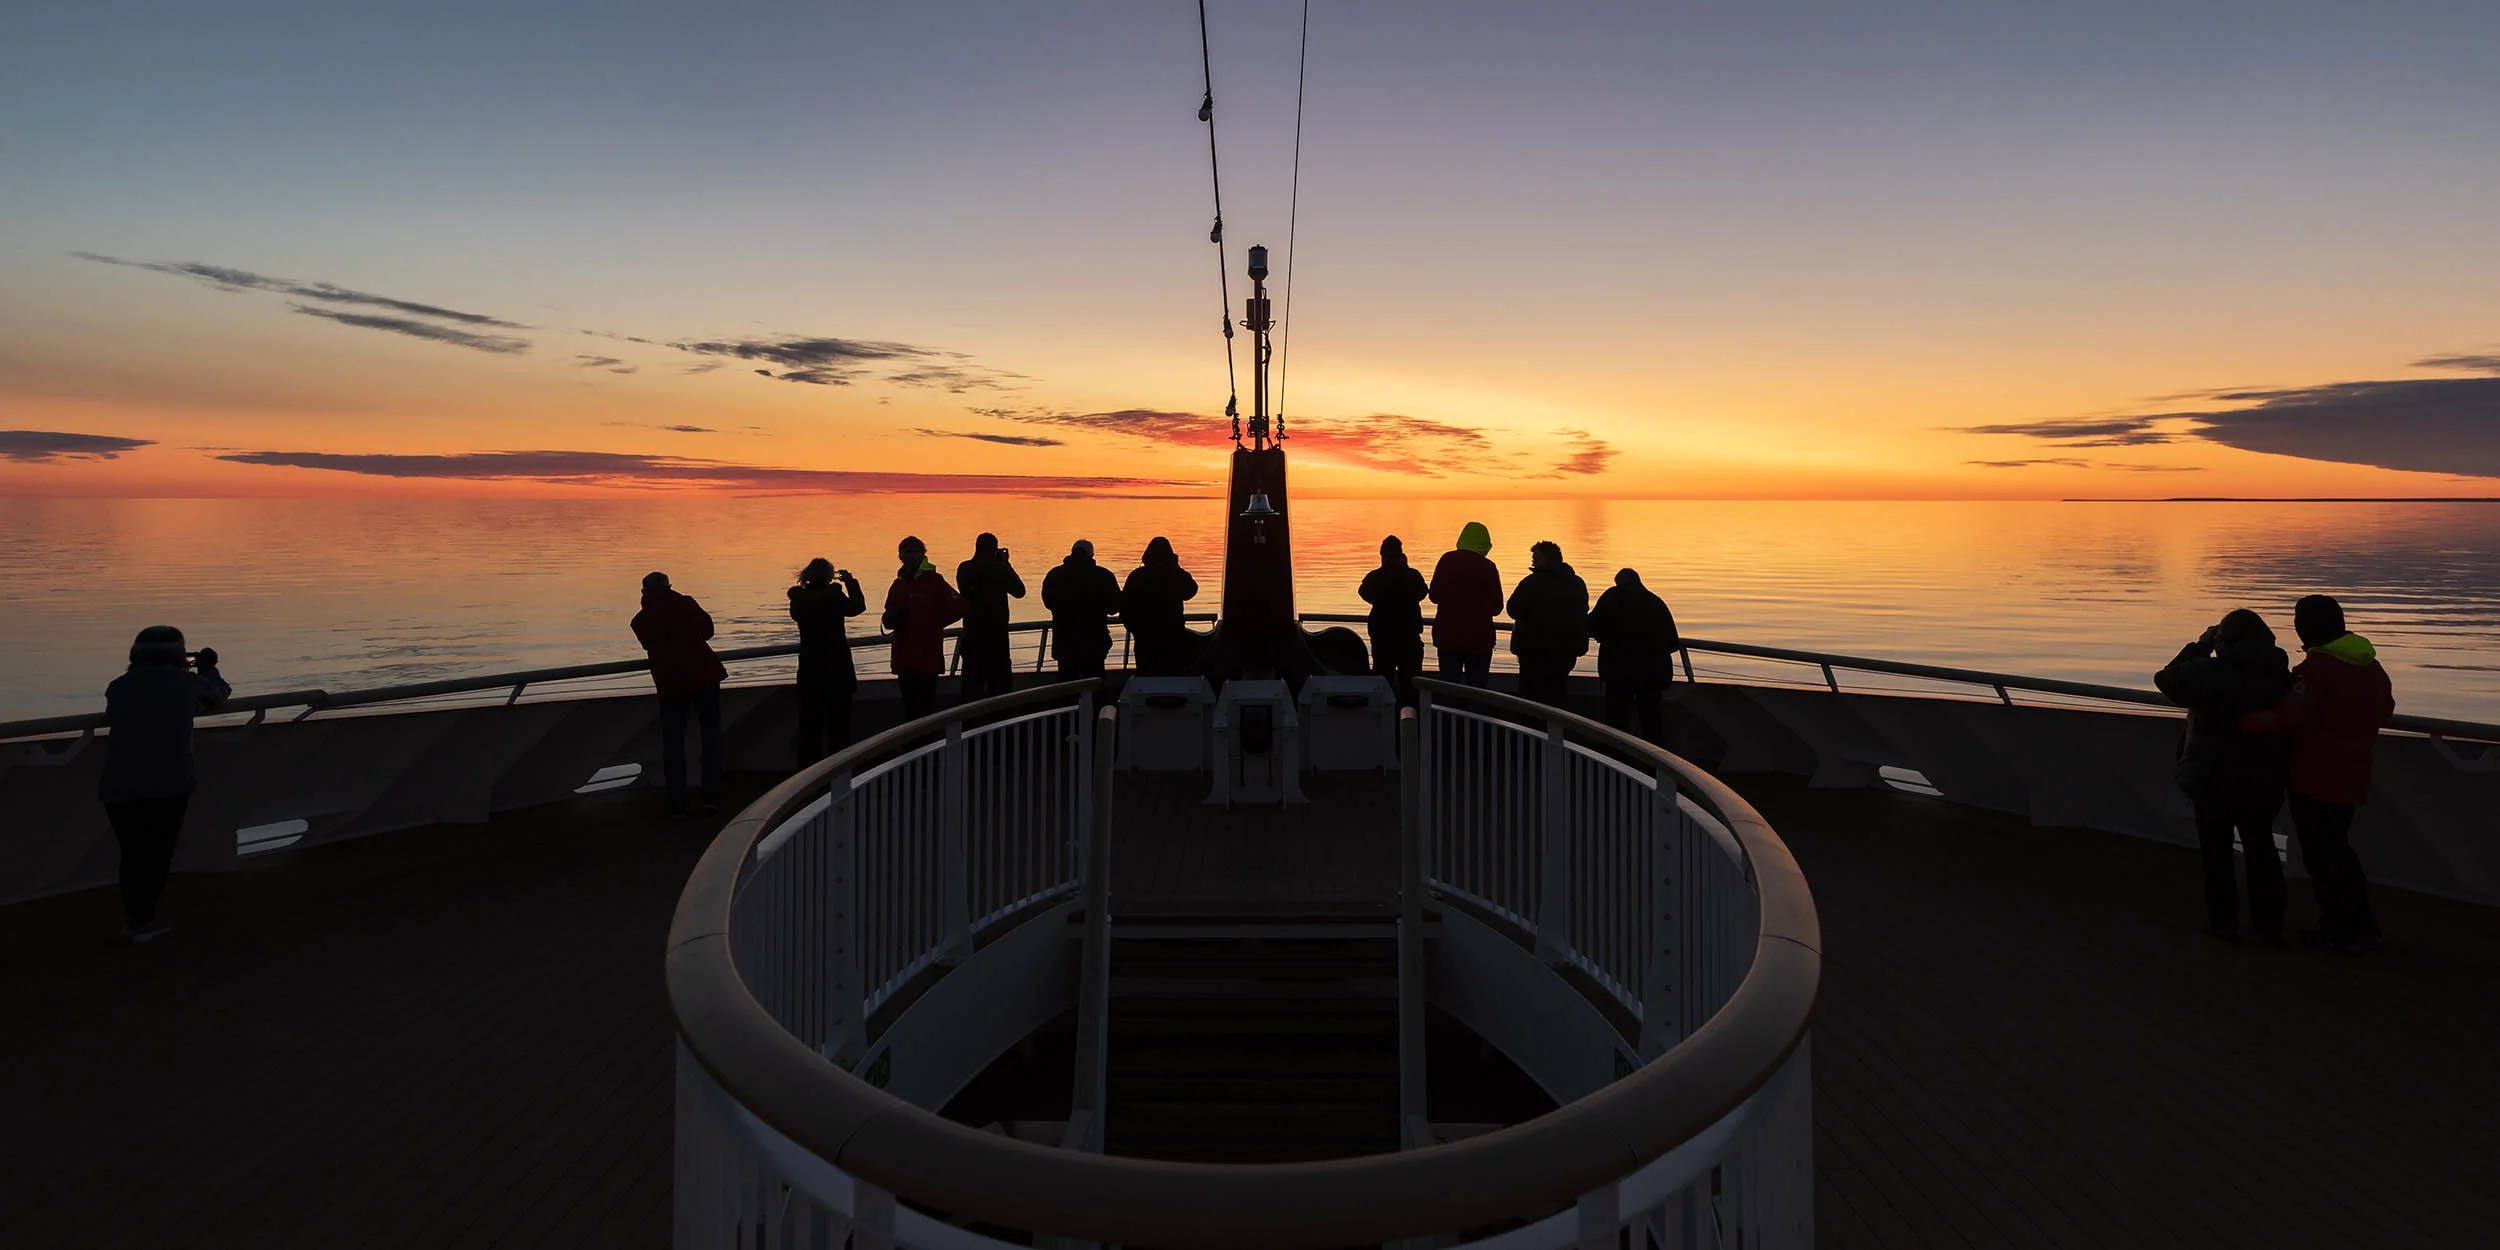 Guests enjoying a dramatic sunset from the Observation Deck onboard MS Roald Amundsen in the Northwest Passage, Canada. Credit Karsten Bidstrup. 